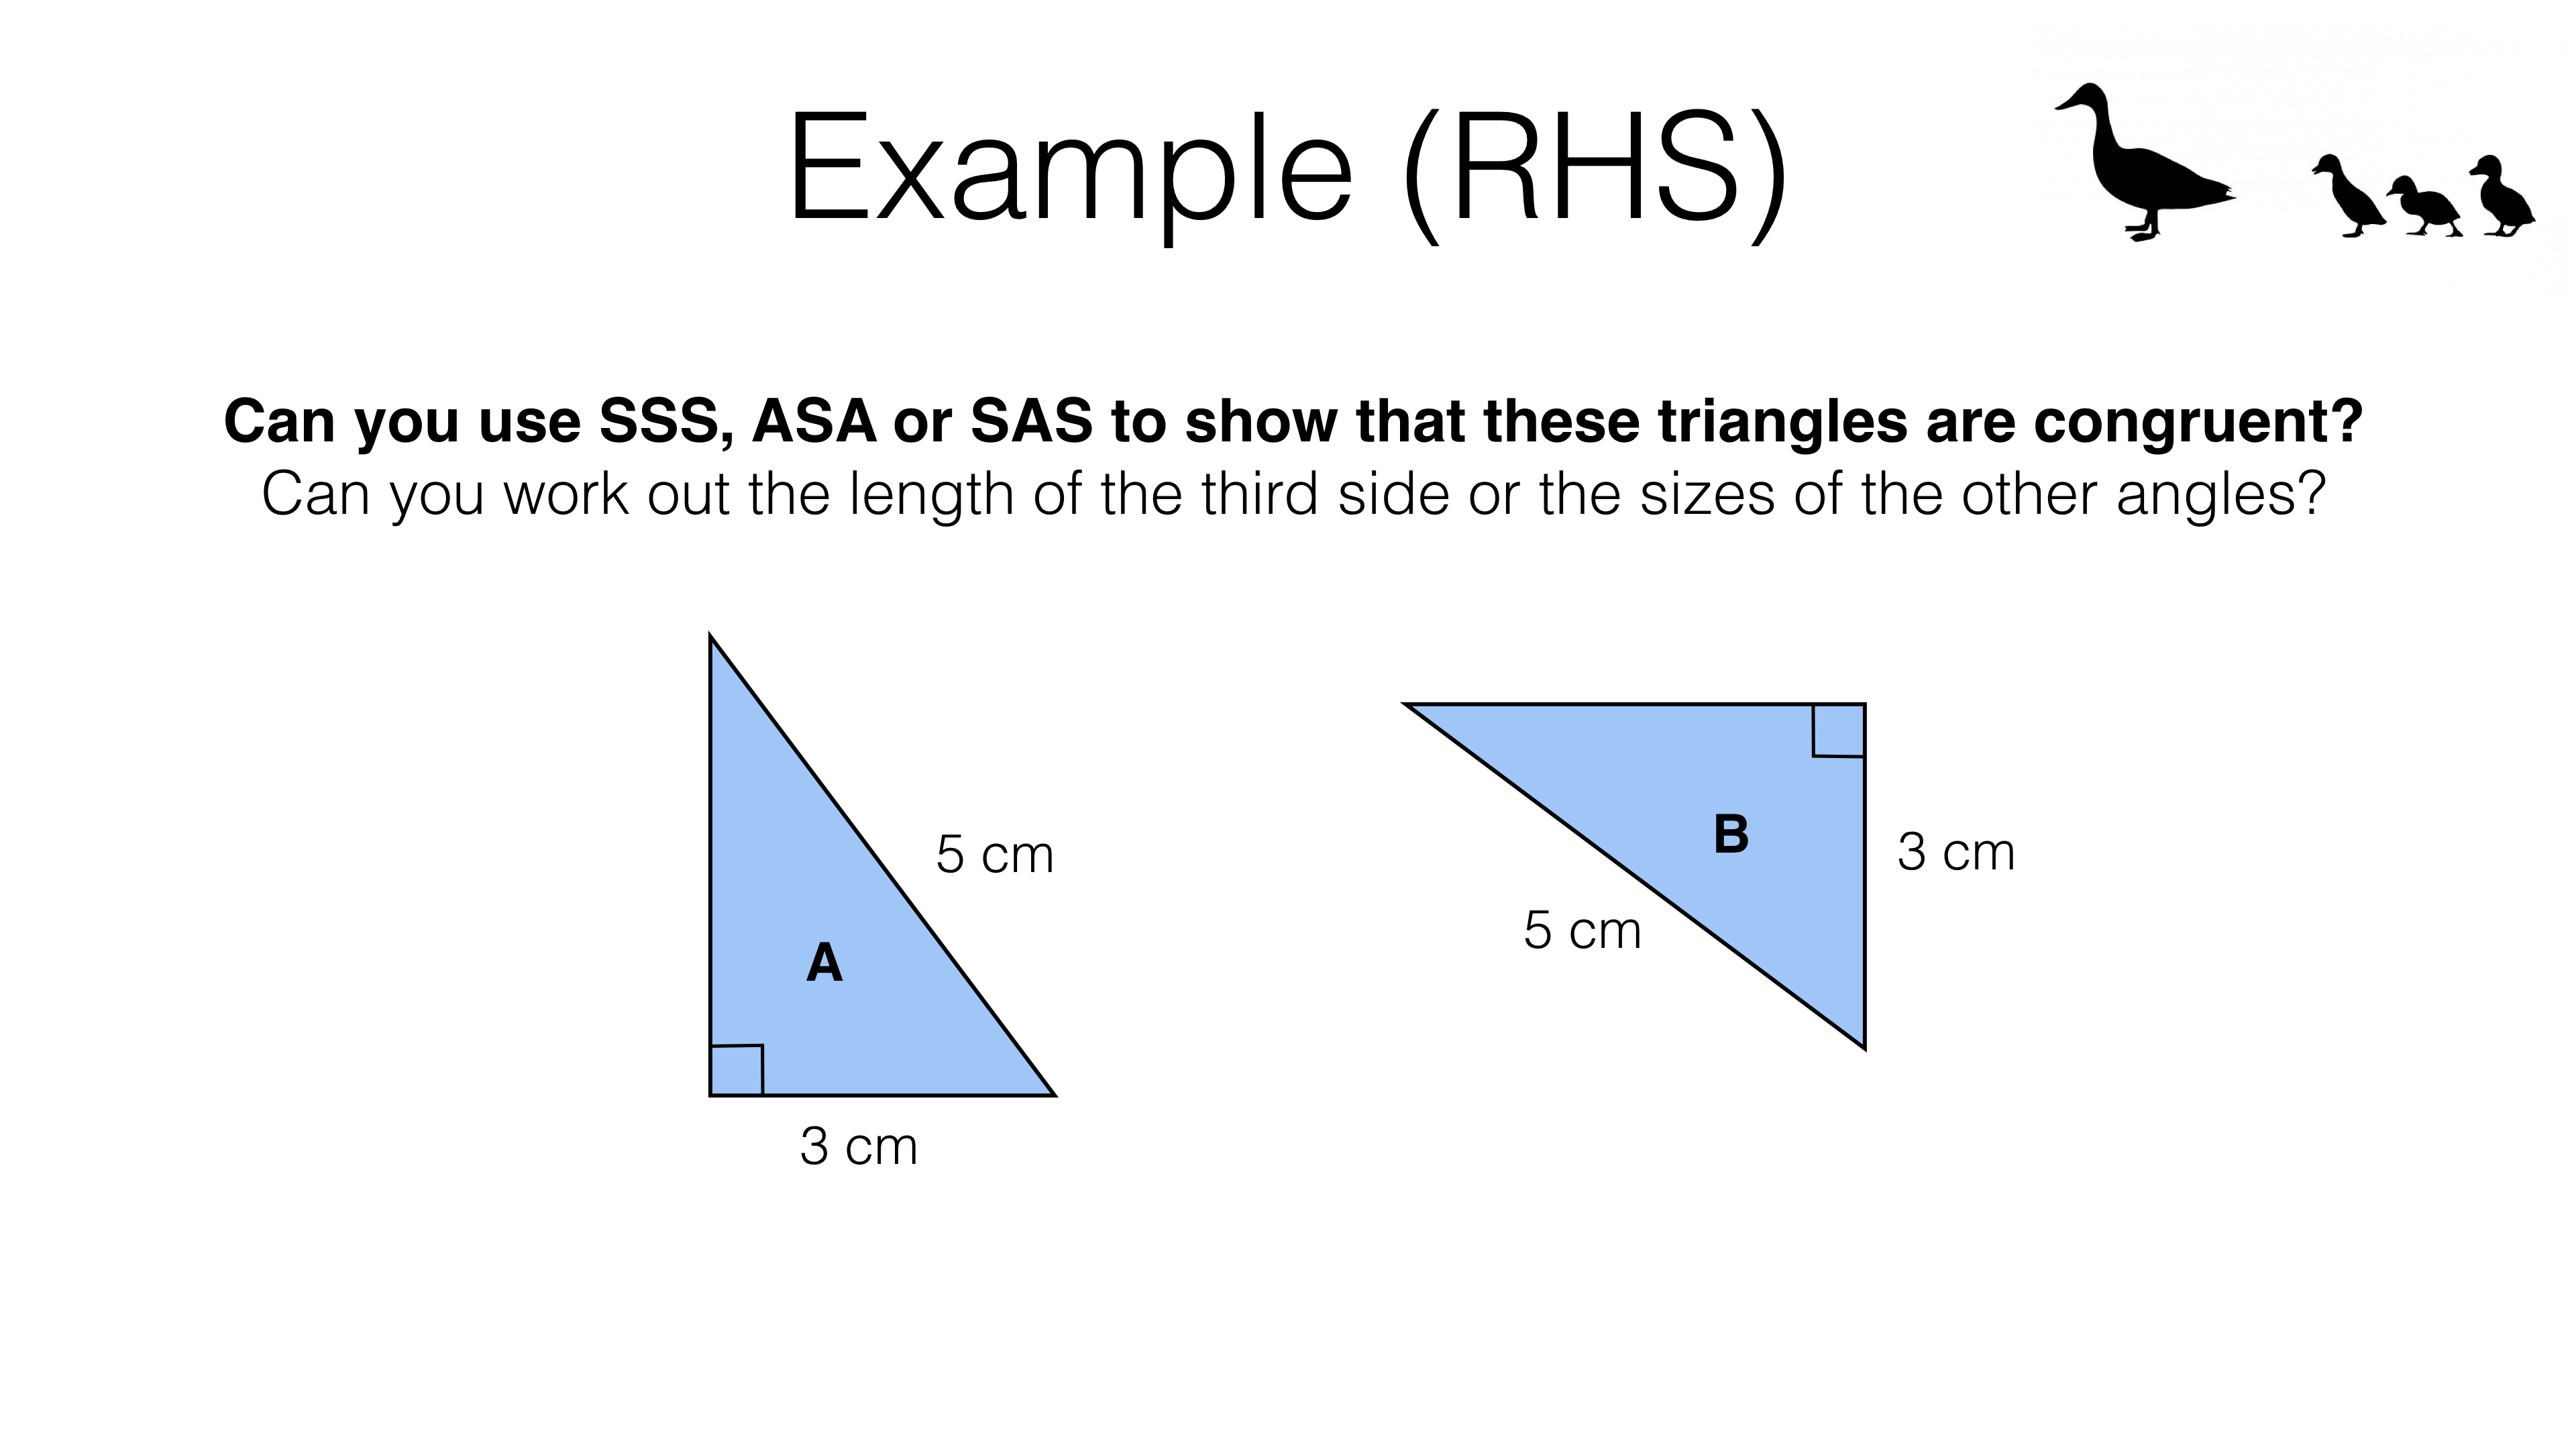 g5a-congruence-criteria-for-triangles-sss-sas-asa-rhs